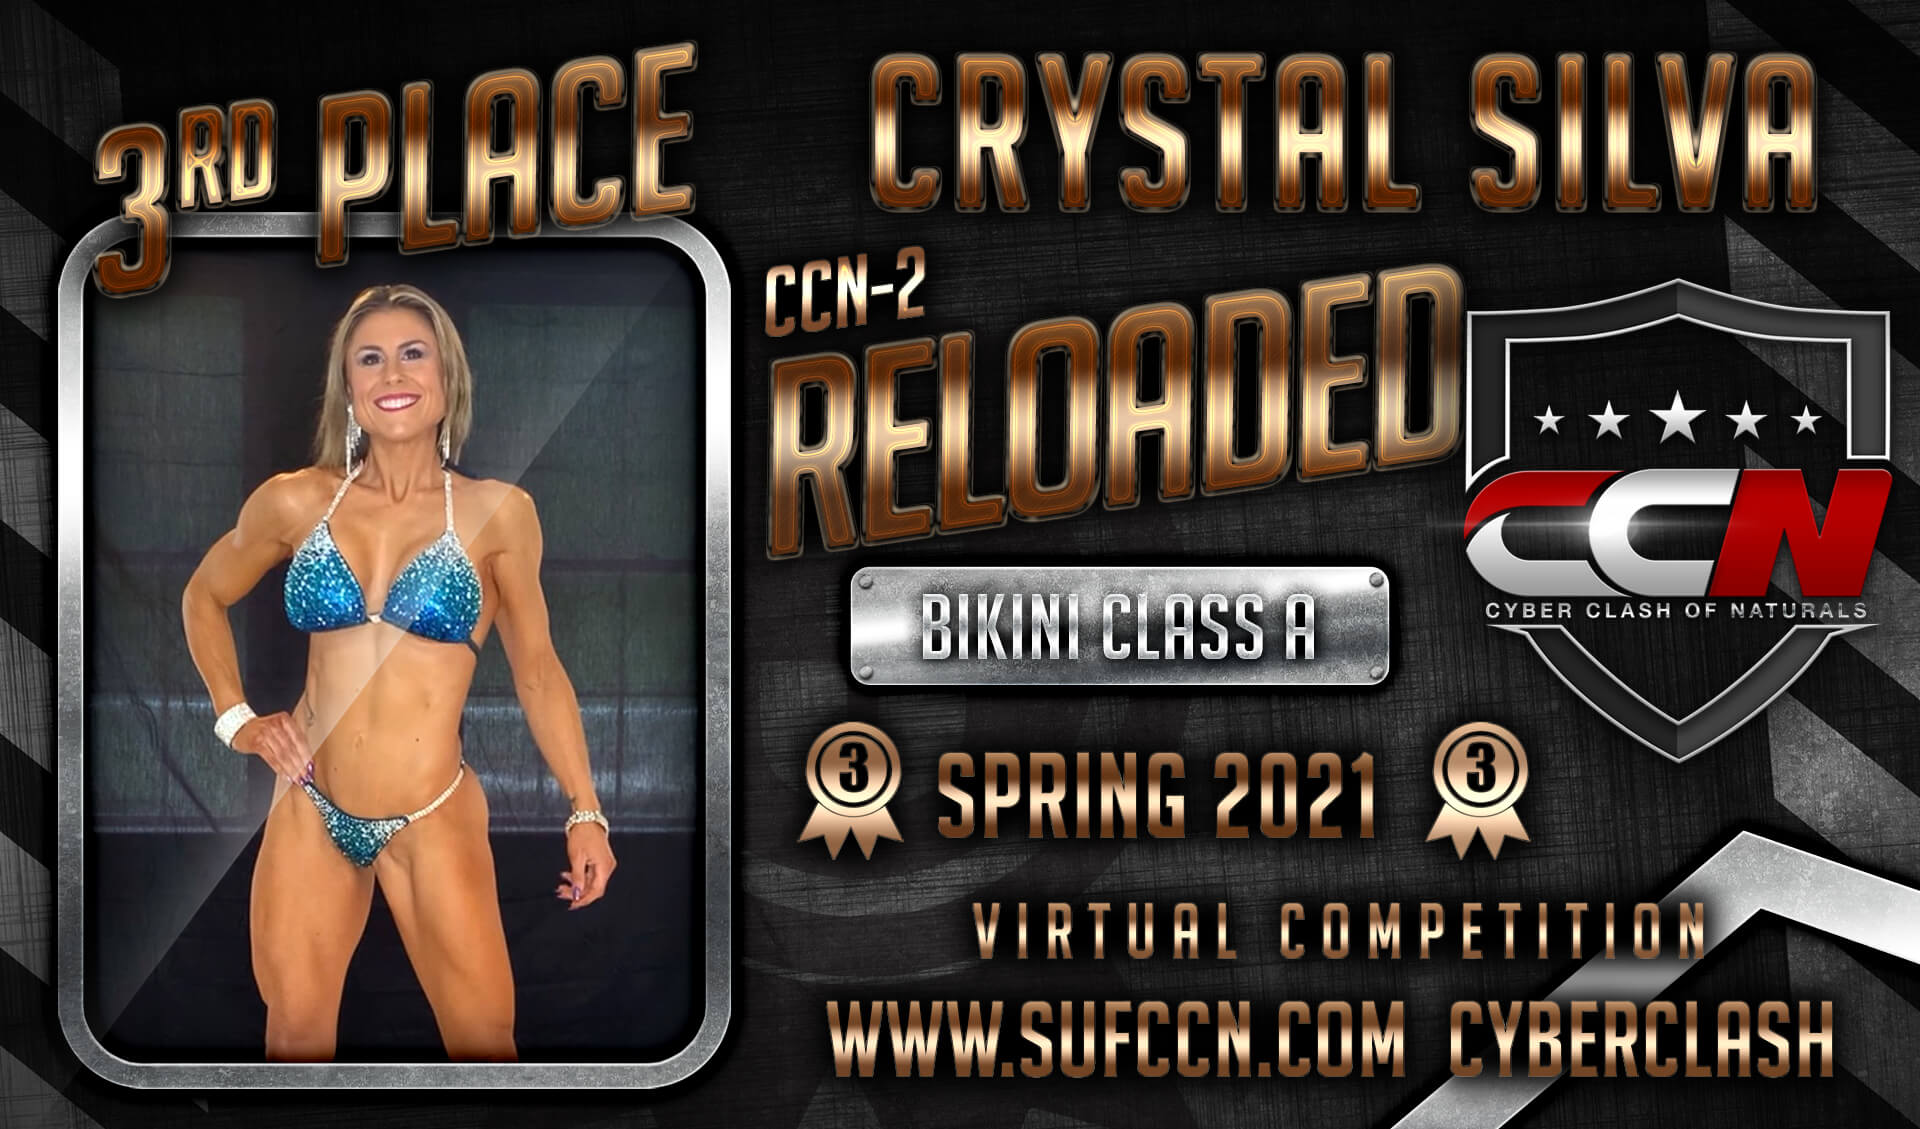 Crystal-S-3rd-place-banner-Bikini-Class-A